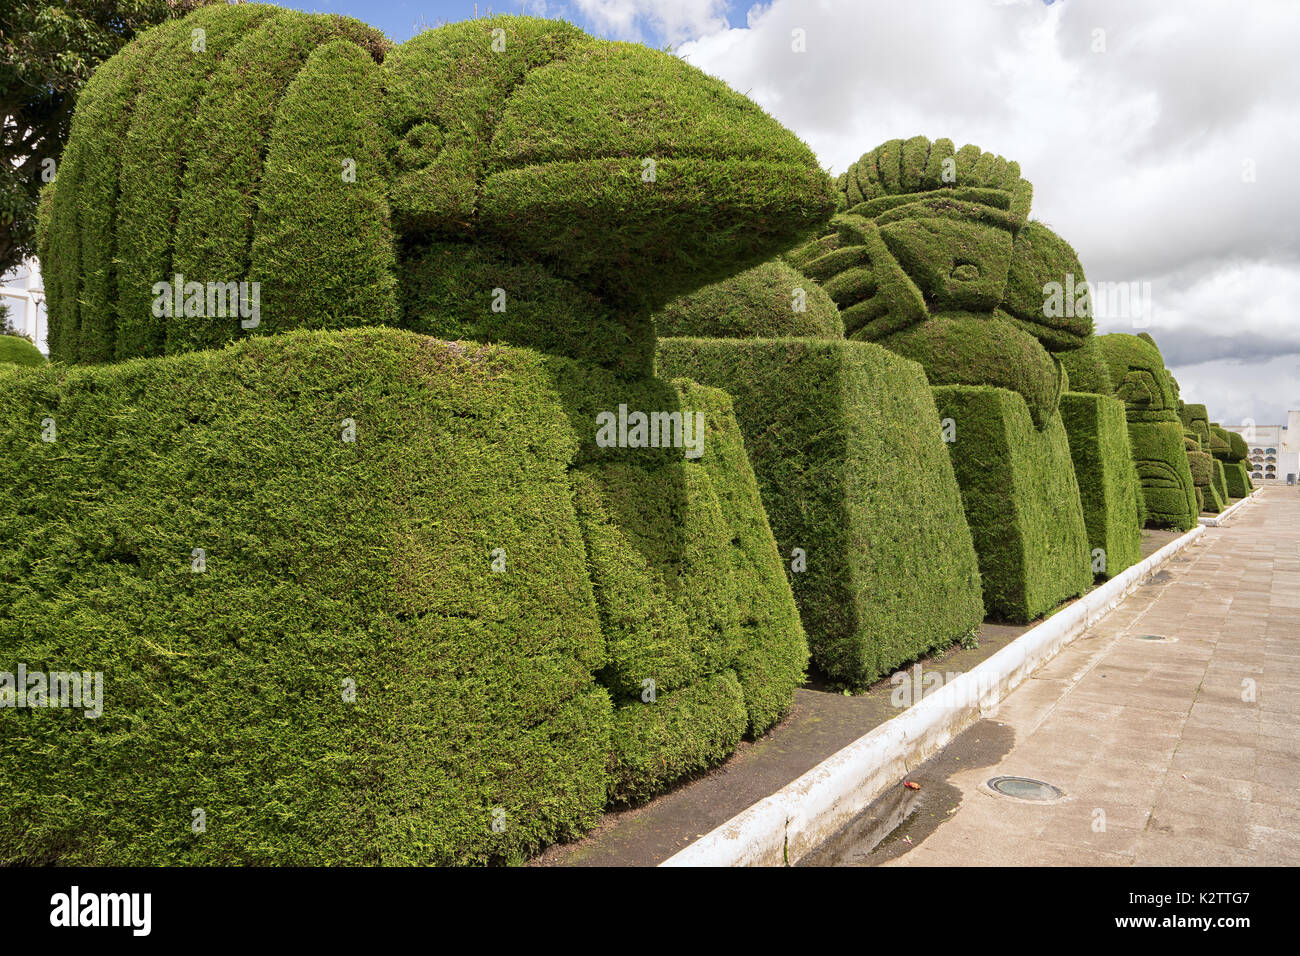 evergreen cypress topiary in the Tulcan Ecuador cemetery a popular tourist destination Stock Photo